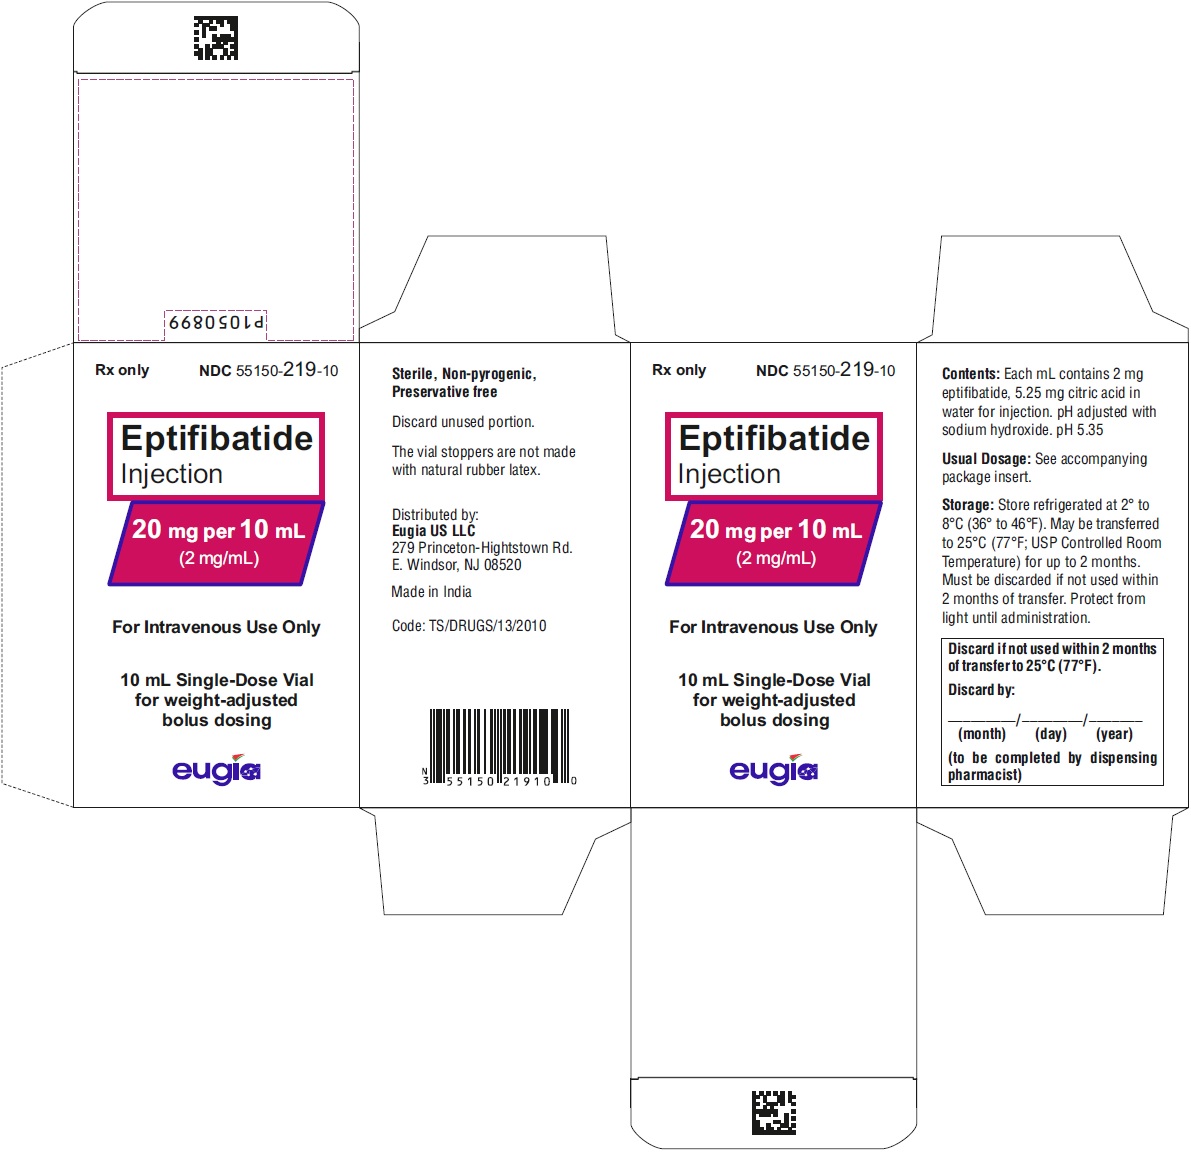 PACKAGE LABEL-PRINCIPAL DISPLAY PANEL - 20 mg per 10 mL (2 mg / mL) - Container-Carton (1 Vial)